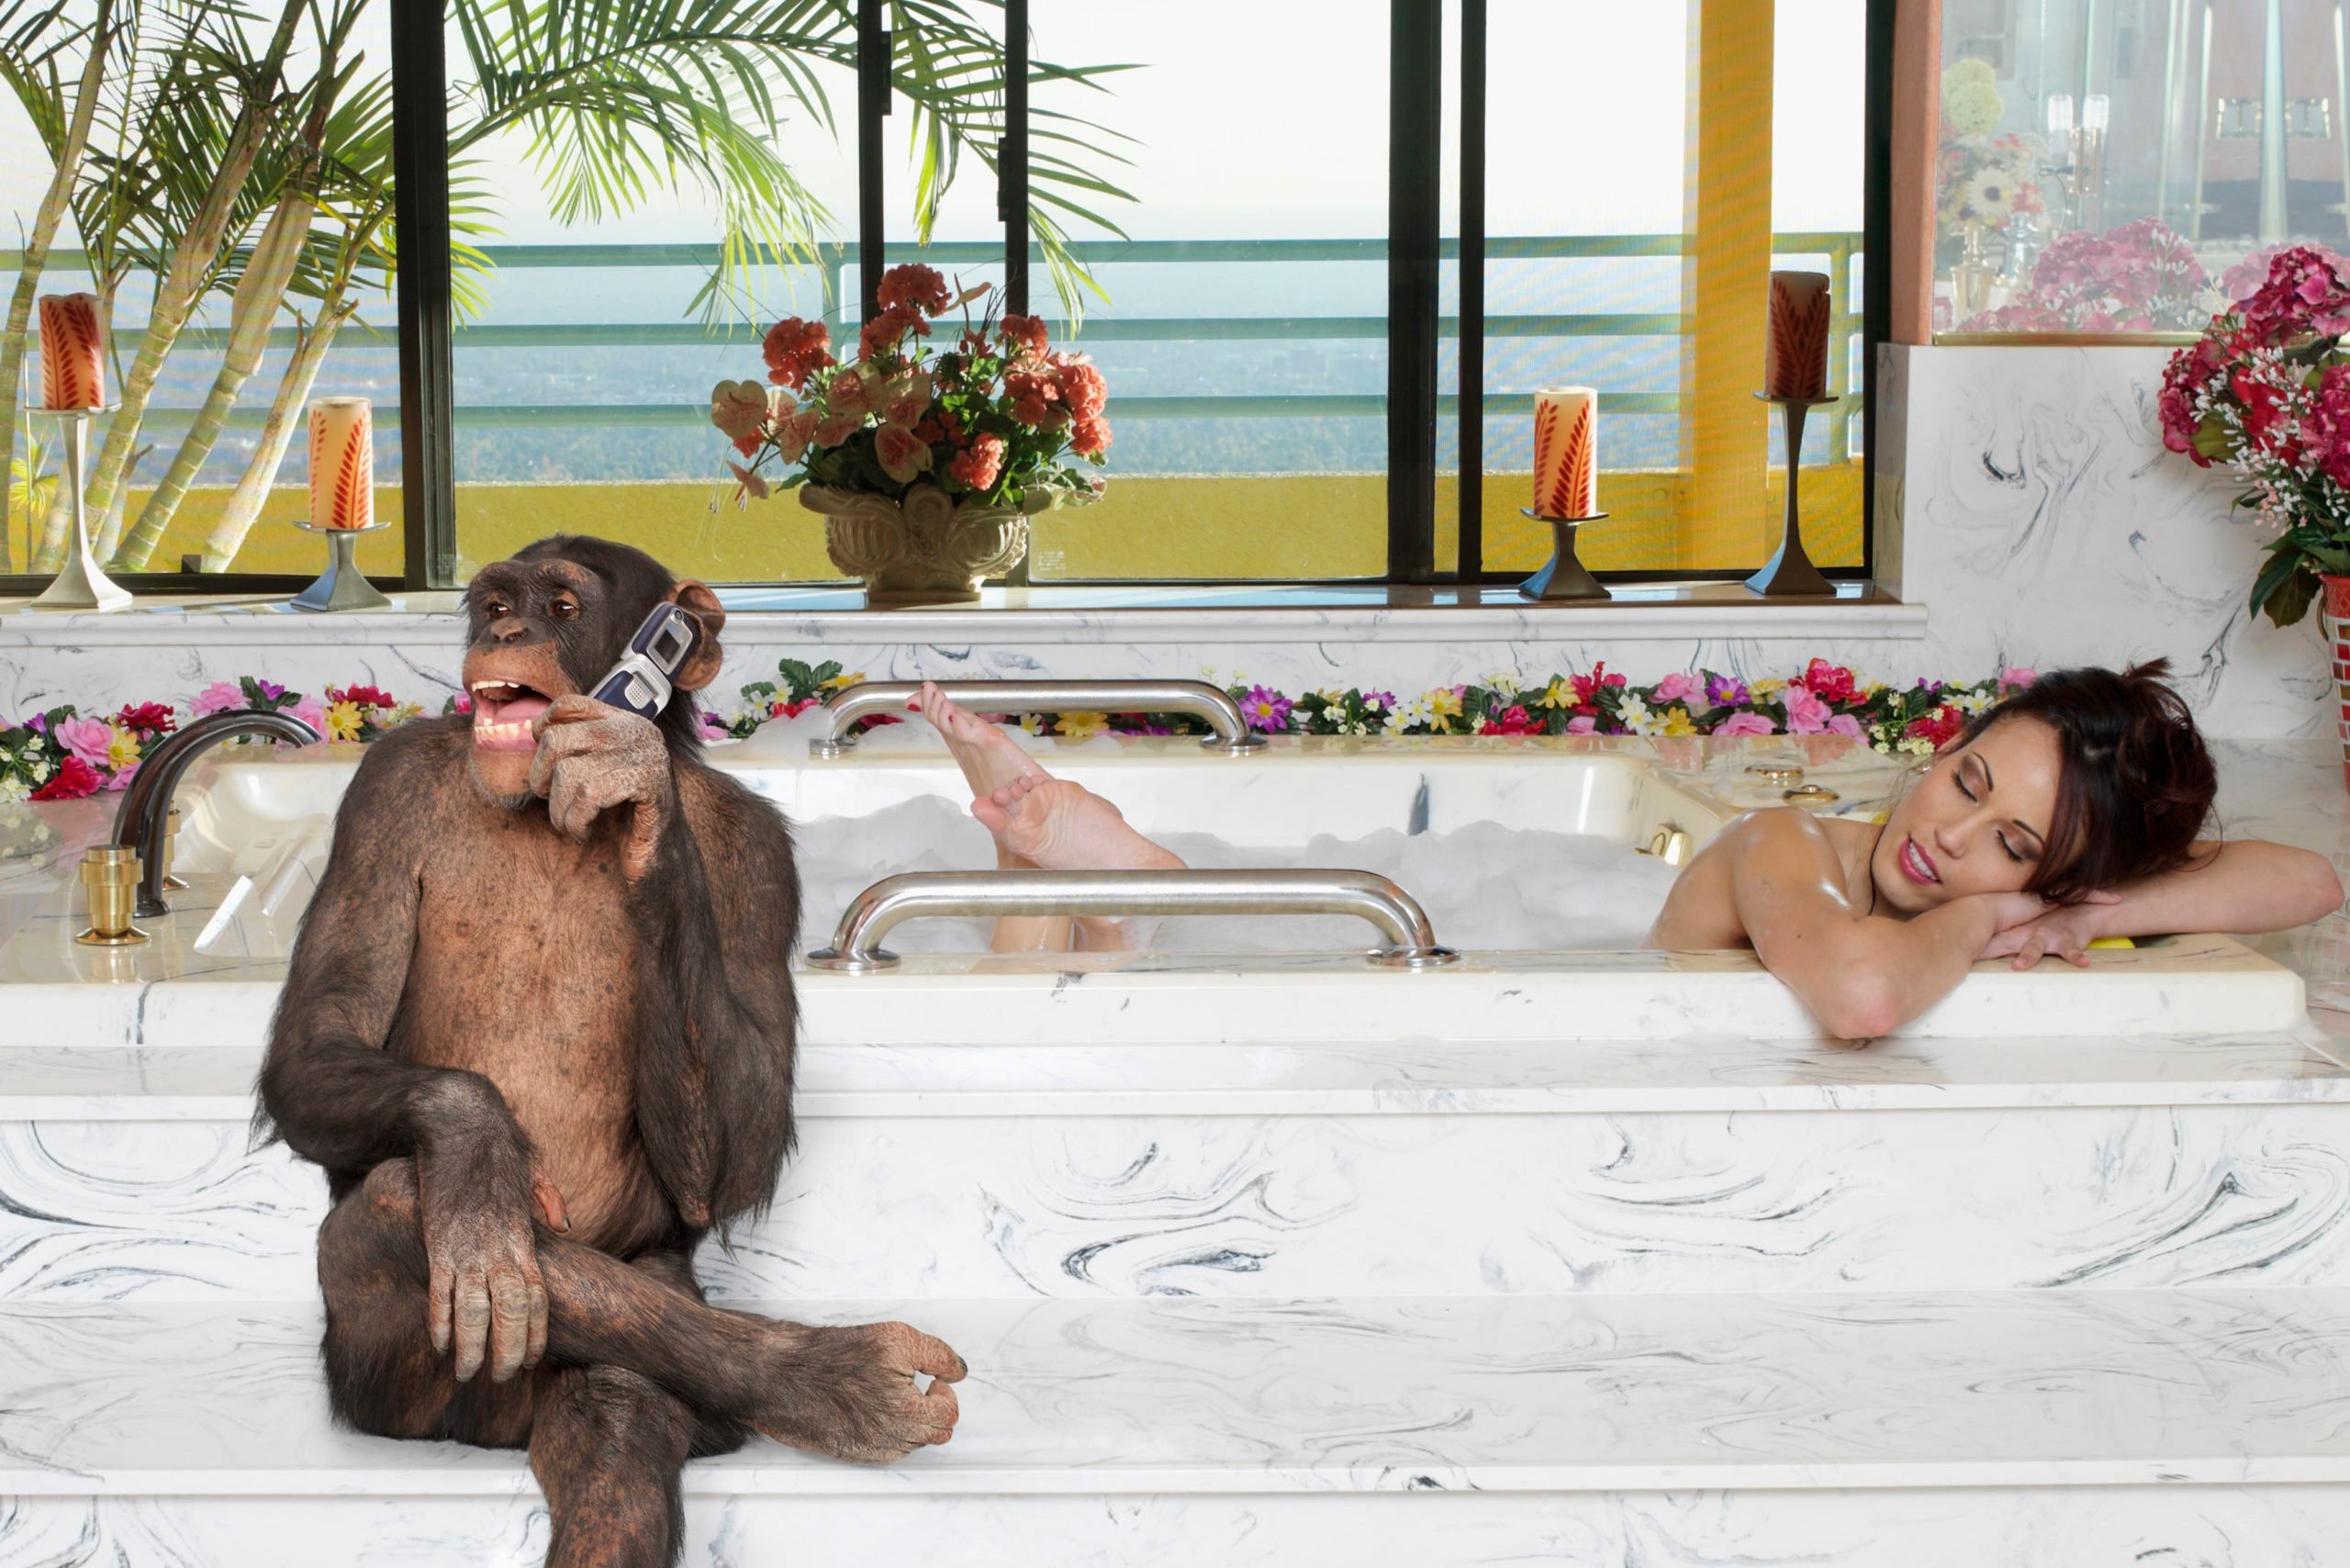 Monkey talking on cell phone while woman takes a bath